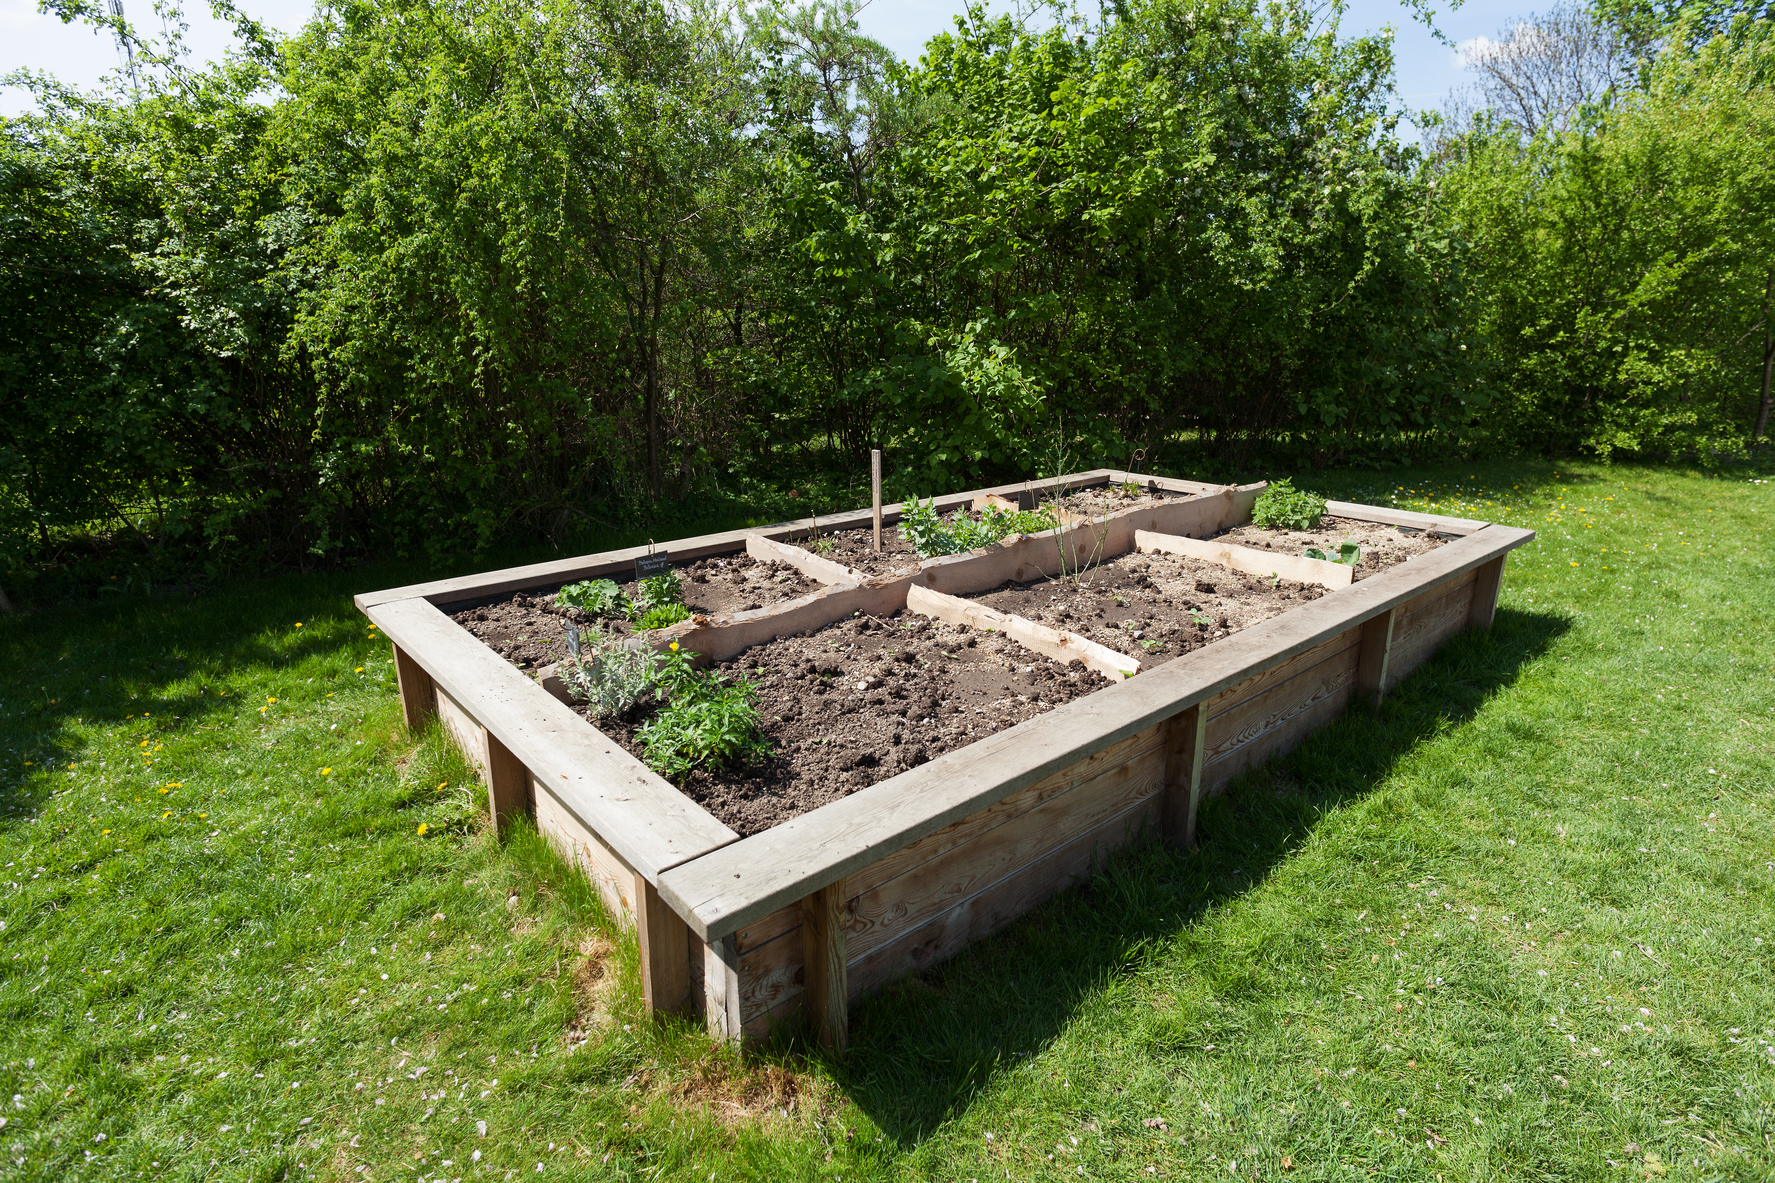 How can you build a mini farm garden in a small yard?